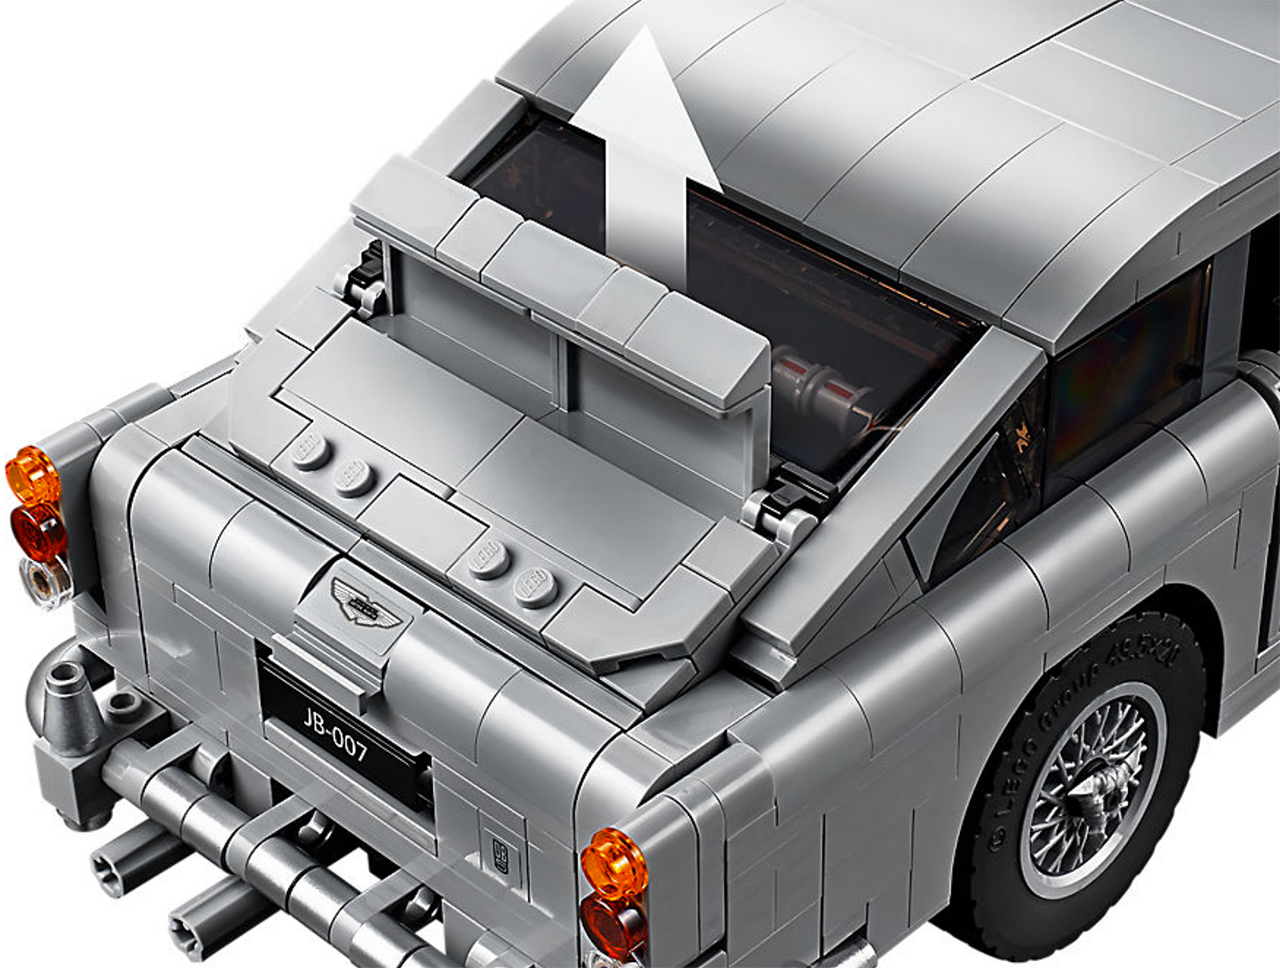 LEGO Creator Expert Aston Martin DB5 James Bond 007 detail rear